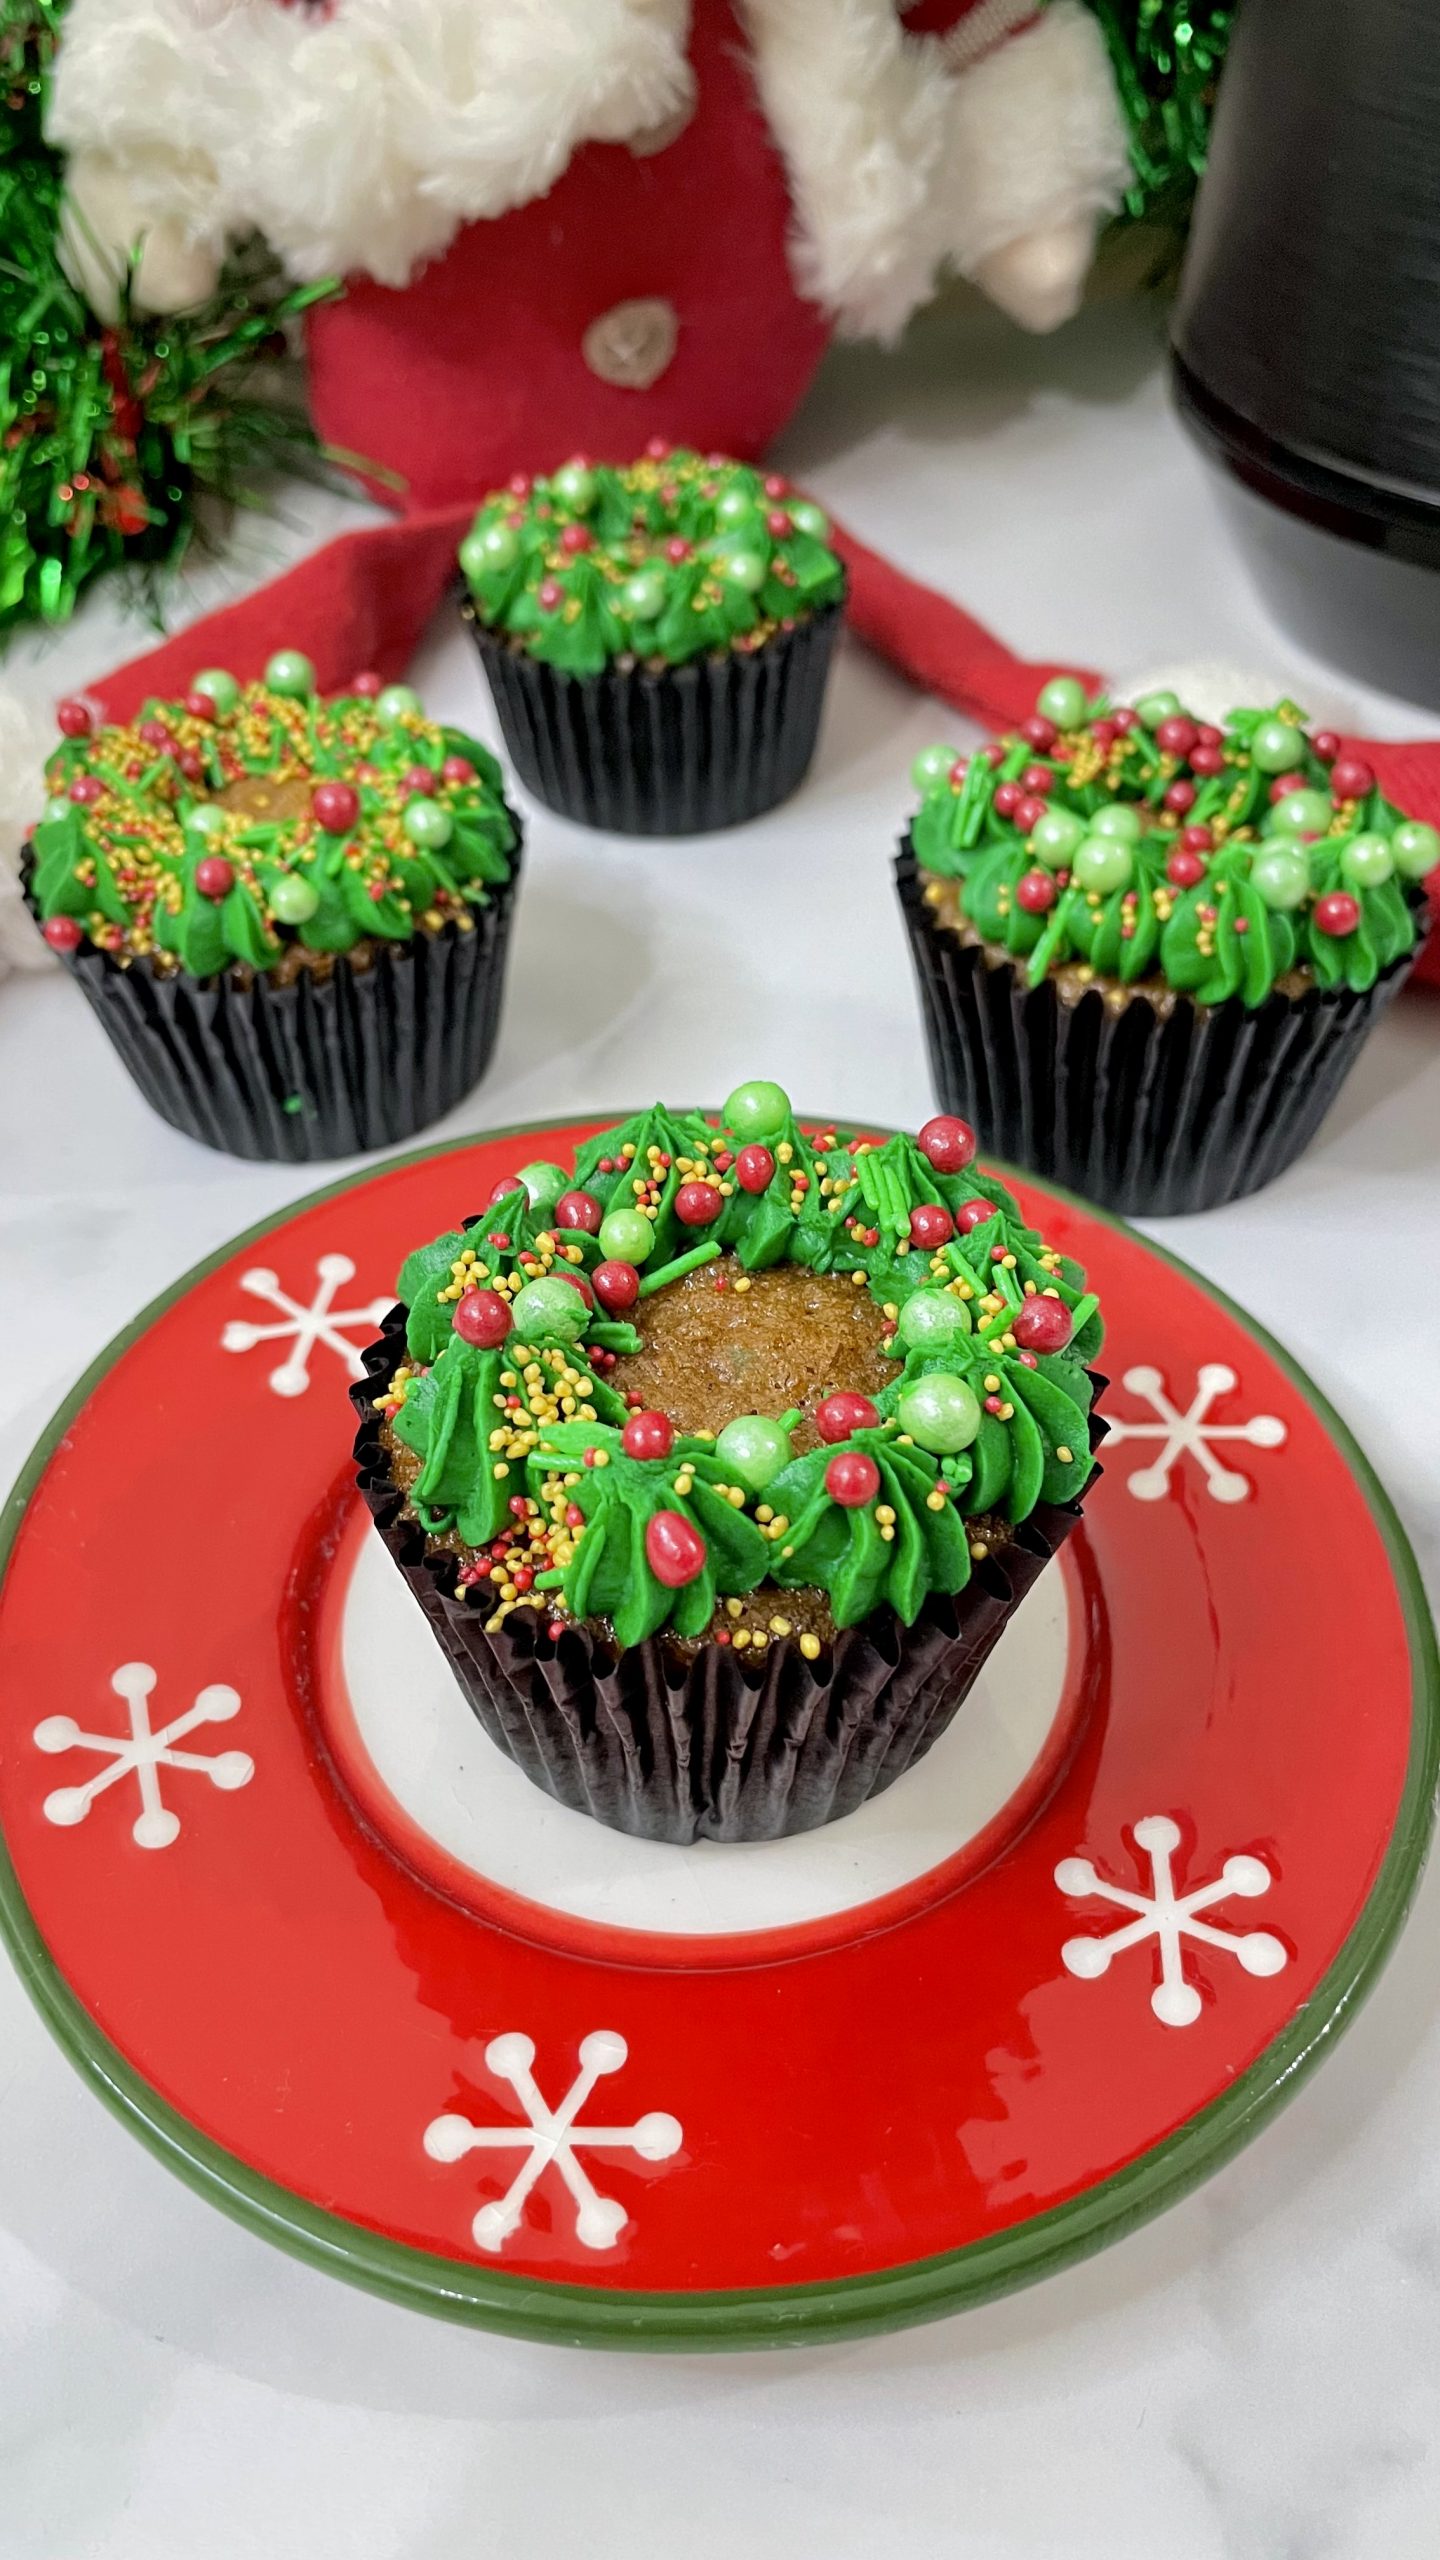 Receta de Cupcakes navideños - Instant Blog